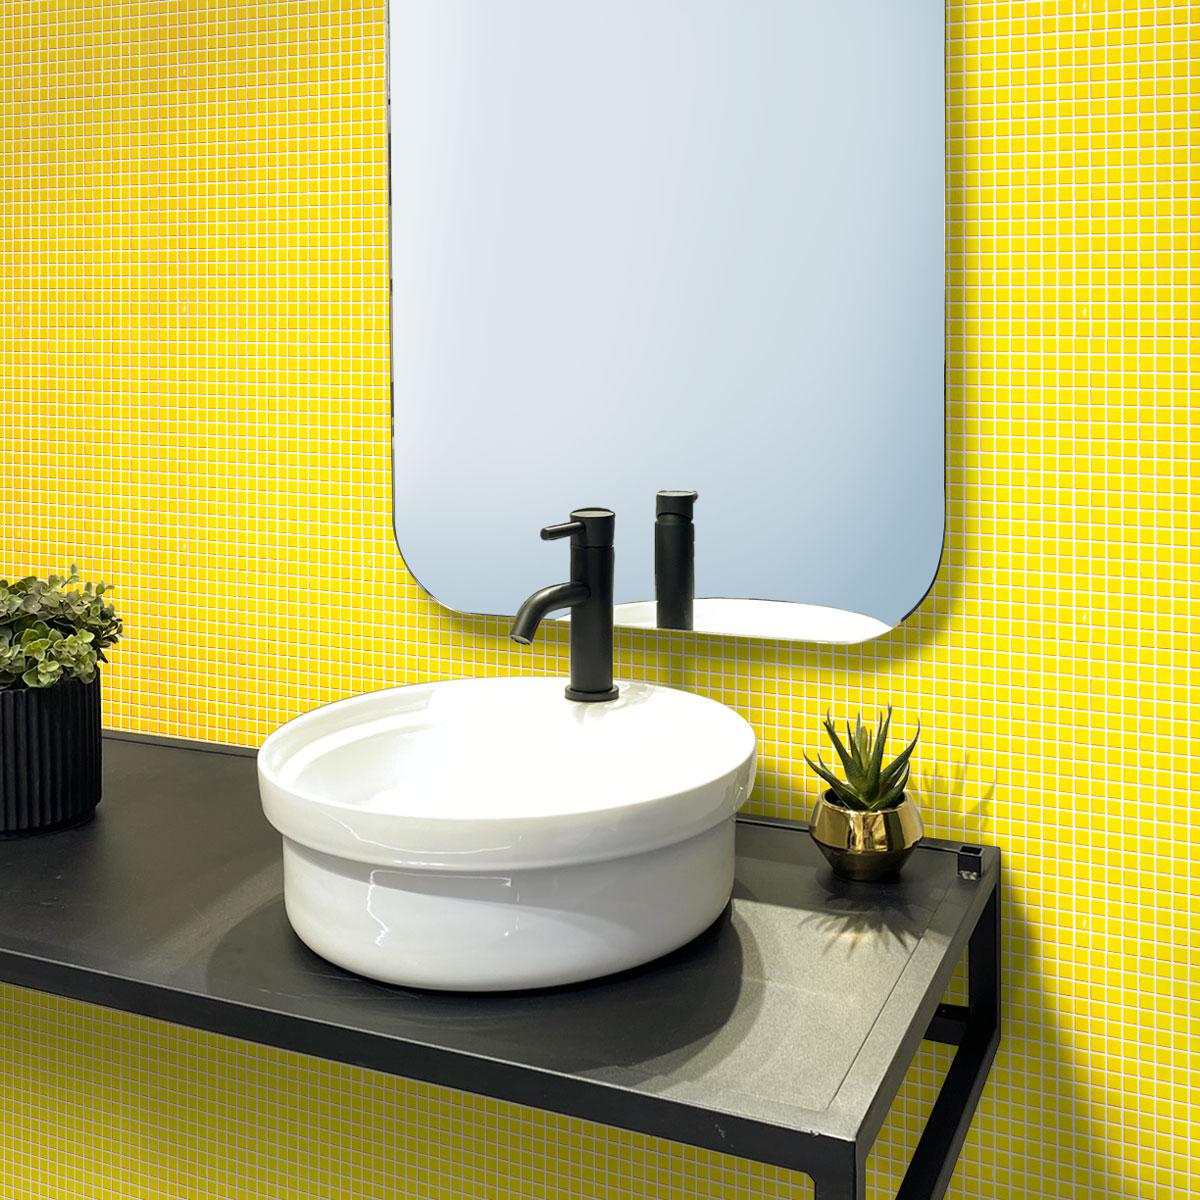 Bright Mustard Yellow Squares Glass Pool Tile Bathroom Backsplash